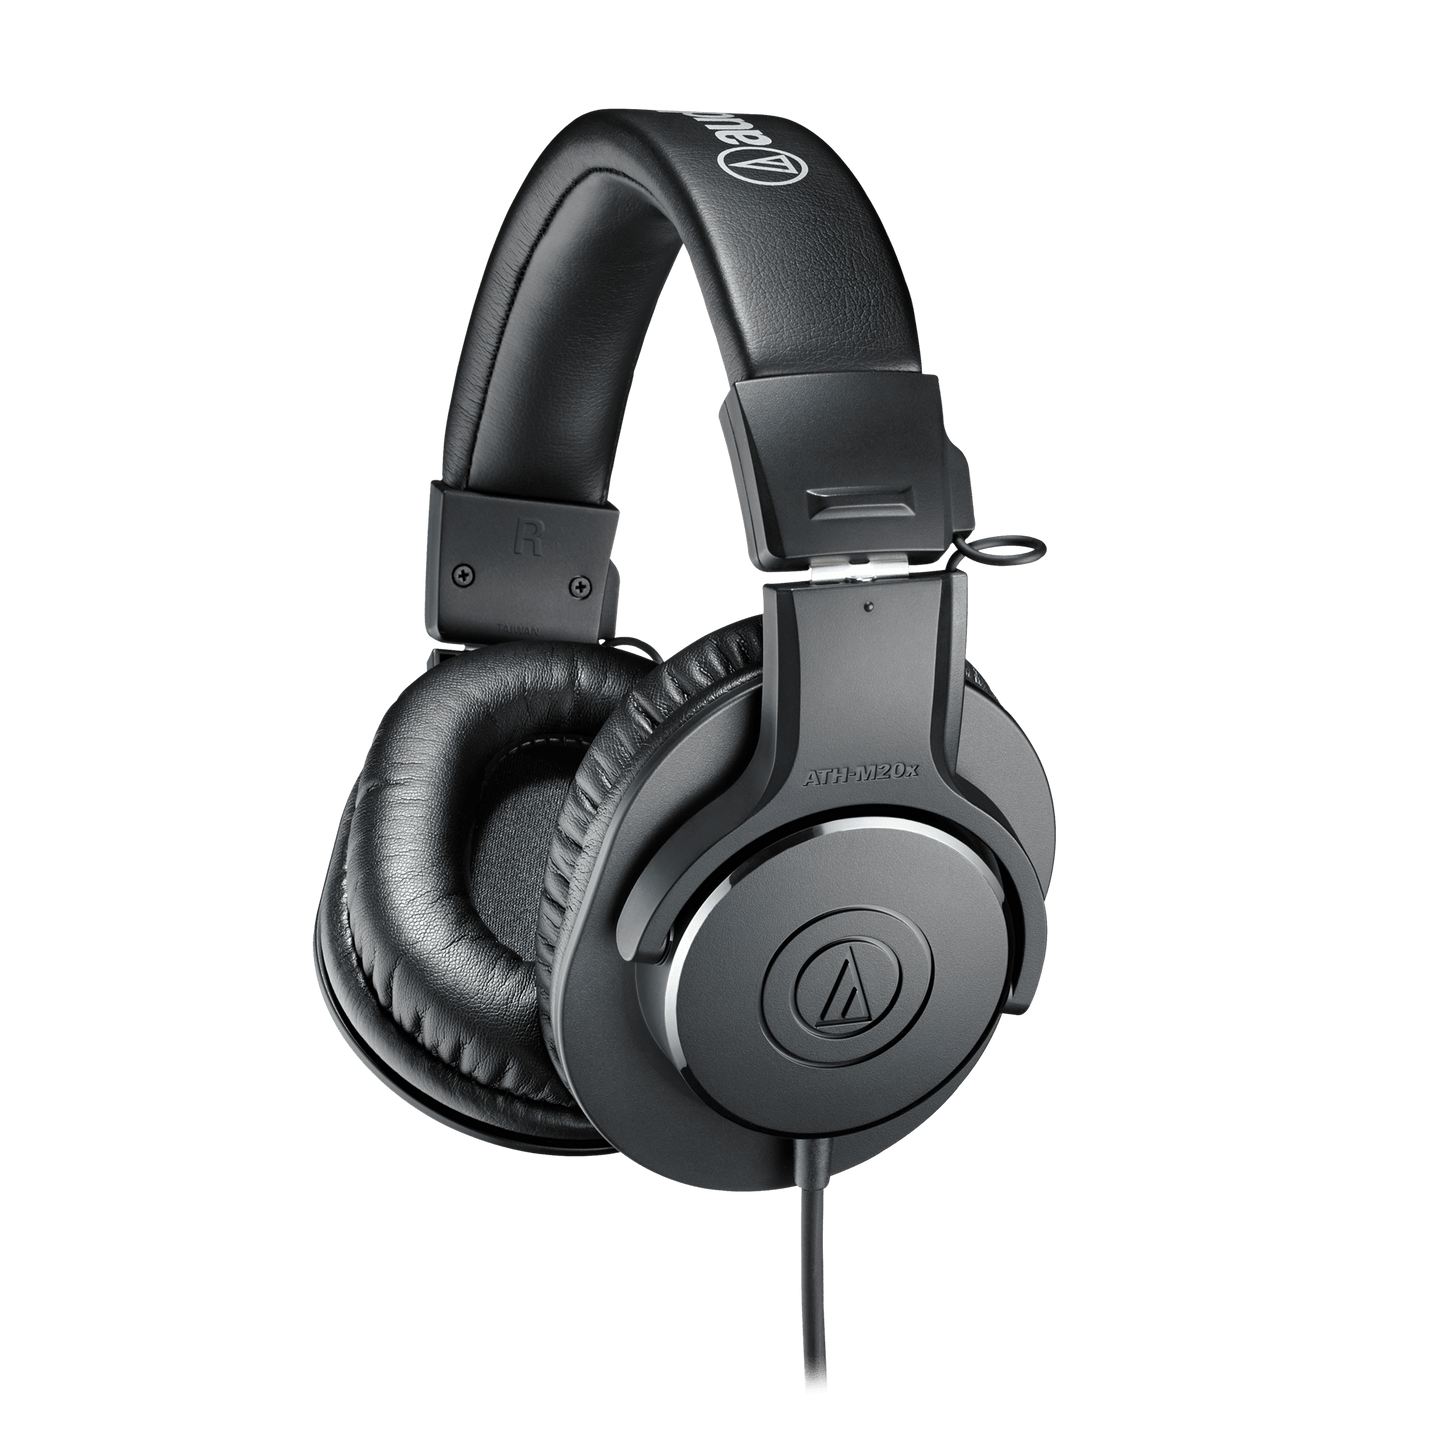 Audio Technica ATH-M20x Closed-back Studio Monitoring Headphones